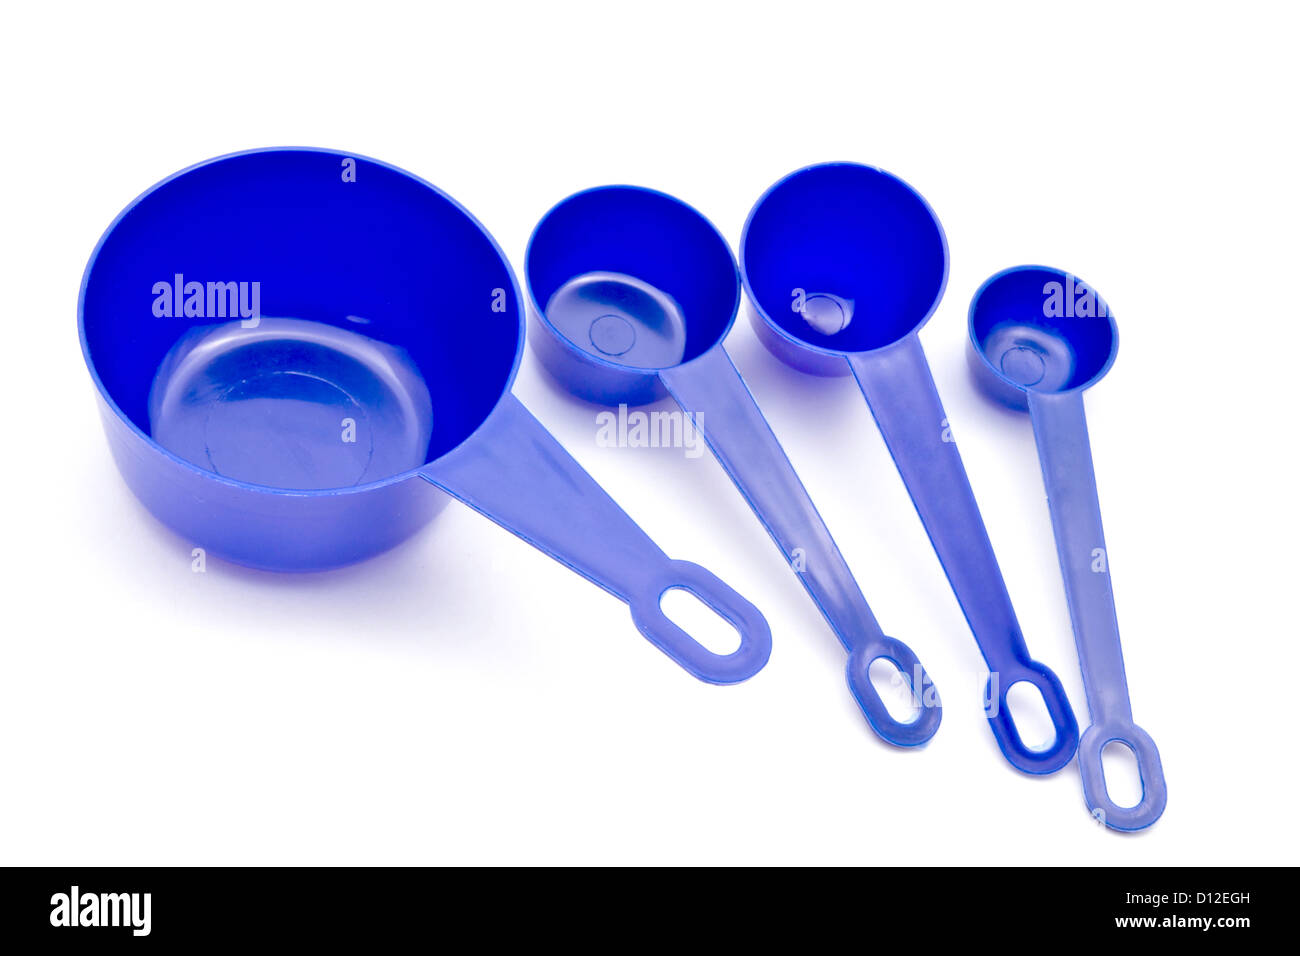 https://c8.alamy.com/comp/D12EGH/blue-measuring-spoons-closeup-on-white-background-D12EGH.jpg